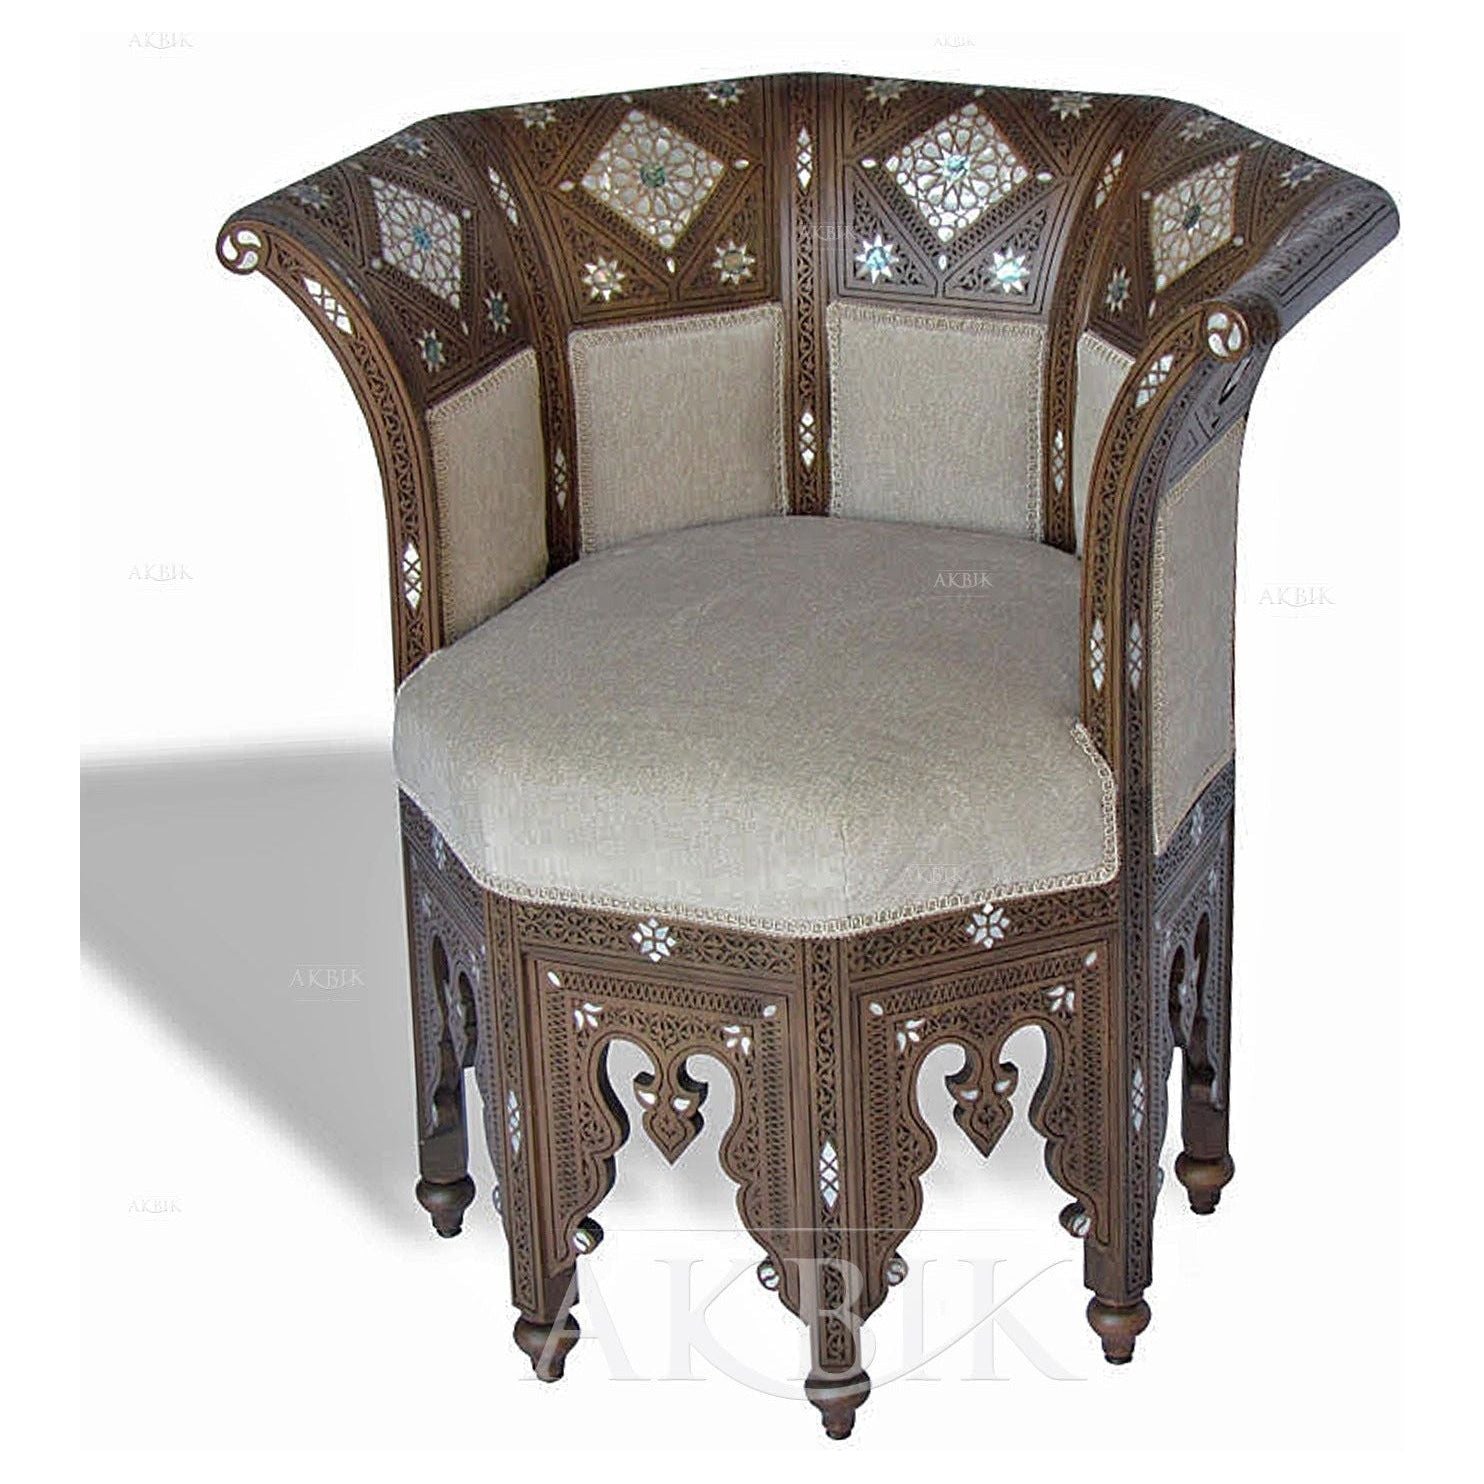 SAND ROSE LEVANTINE CHAIR - AKBIK Furniture & Design